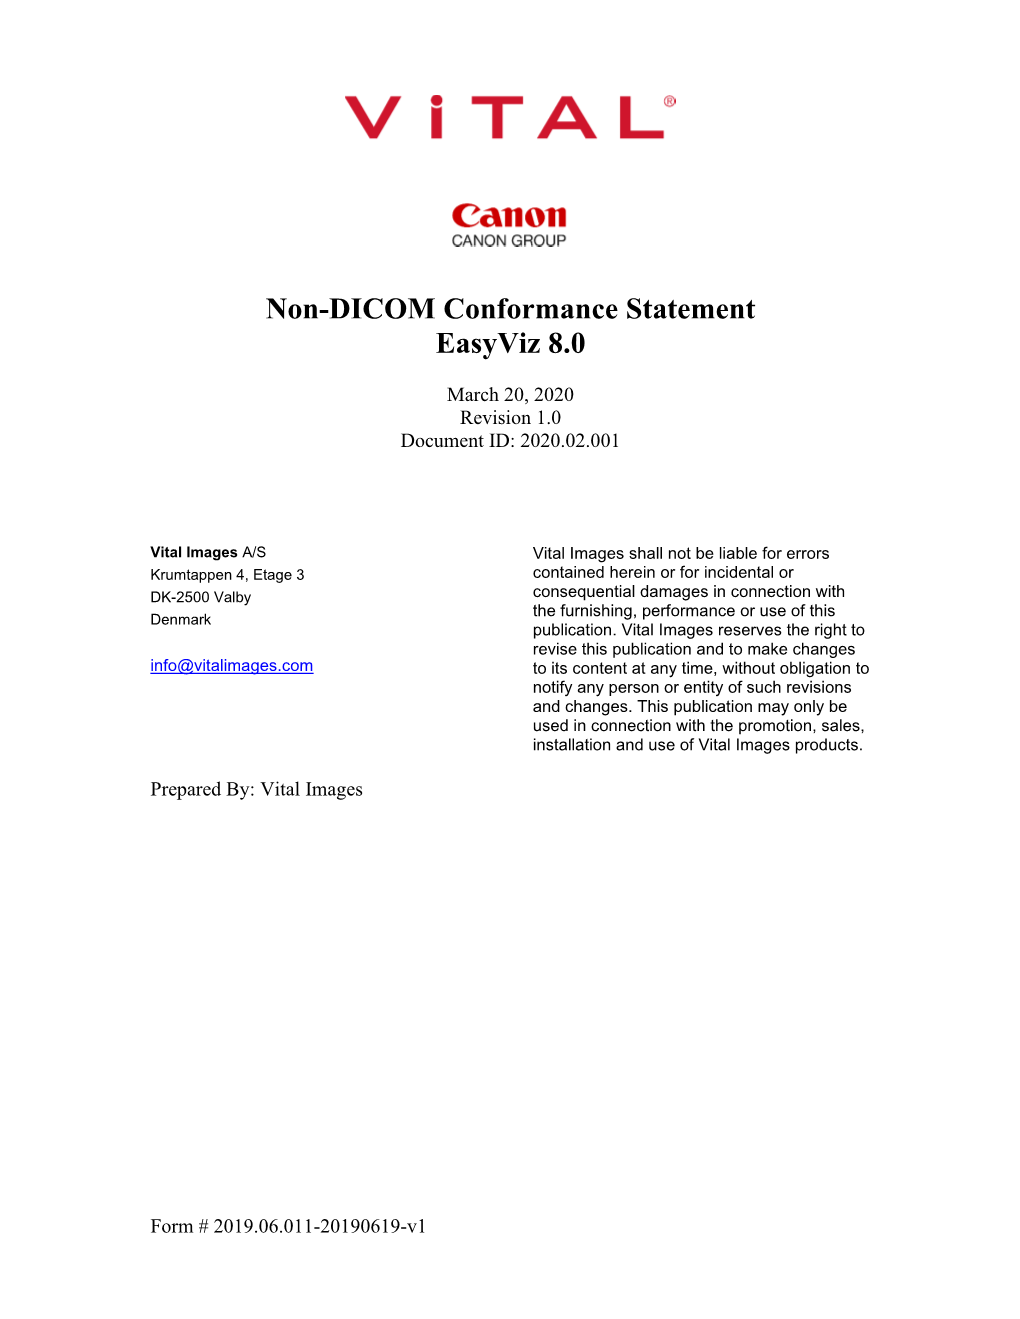 Non-DICOM Conformance Statement Easyviz 8.0